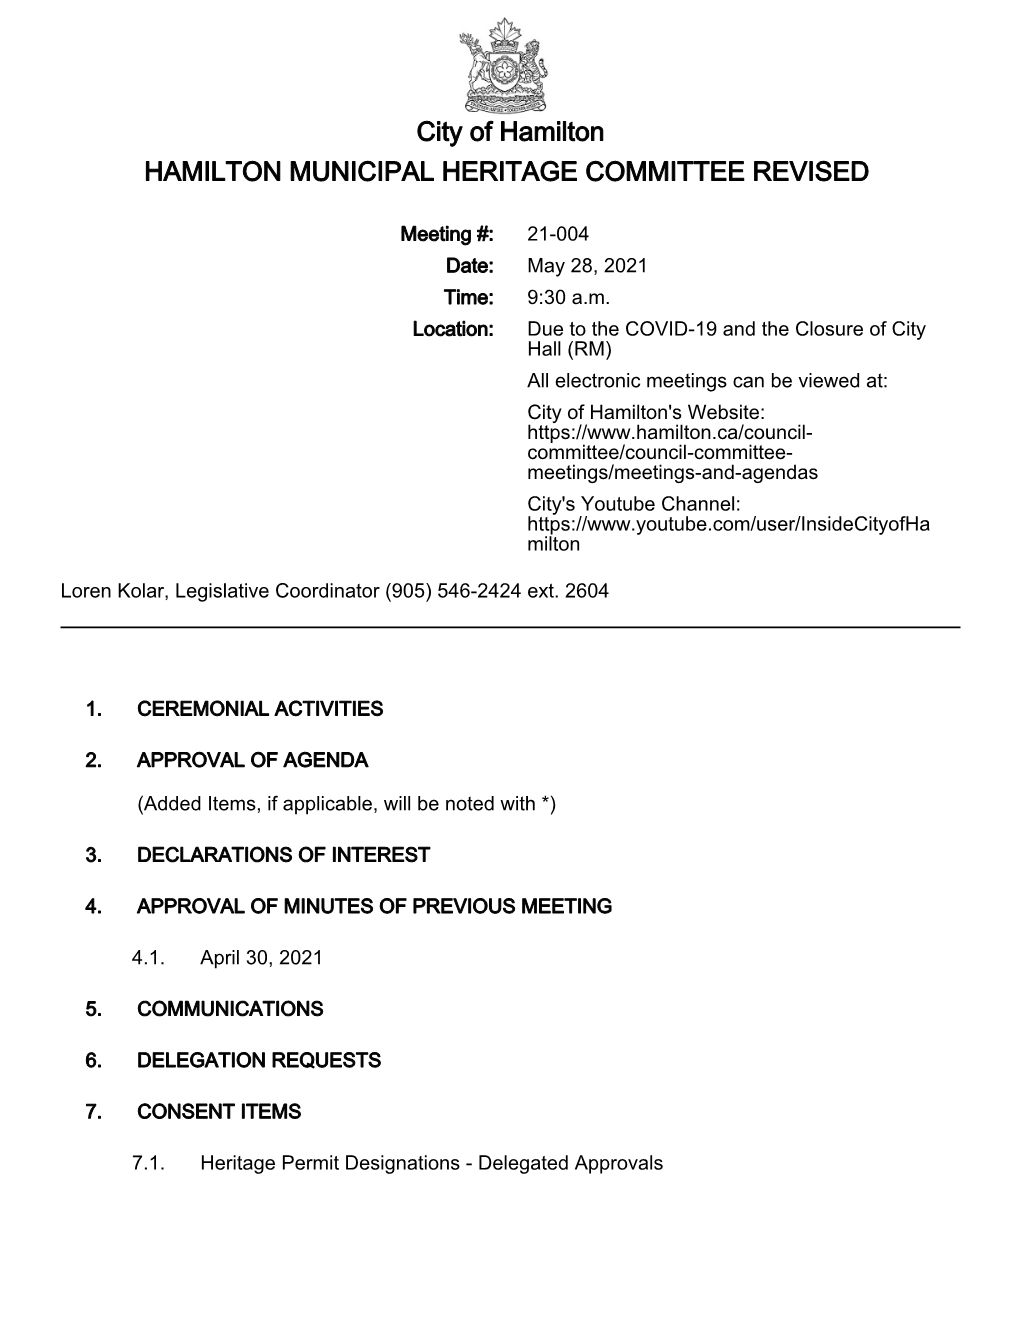 Hamilton Municipal Heritage Committee Agenda Package